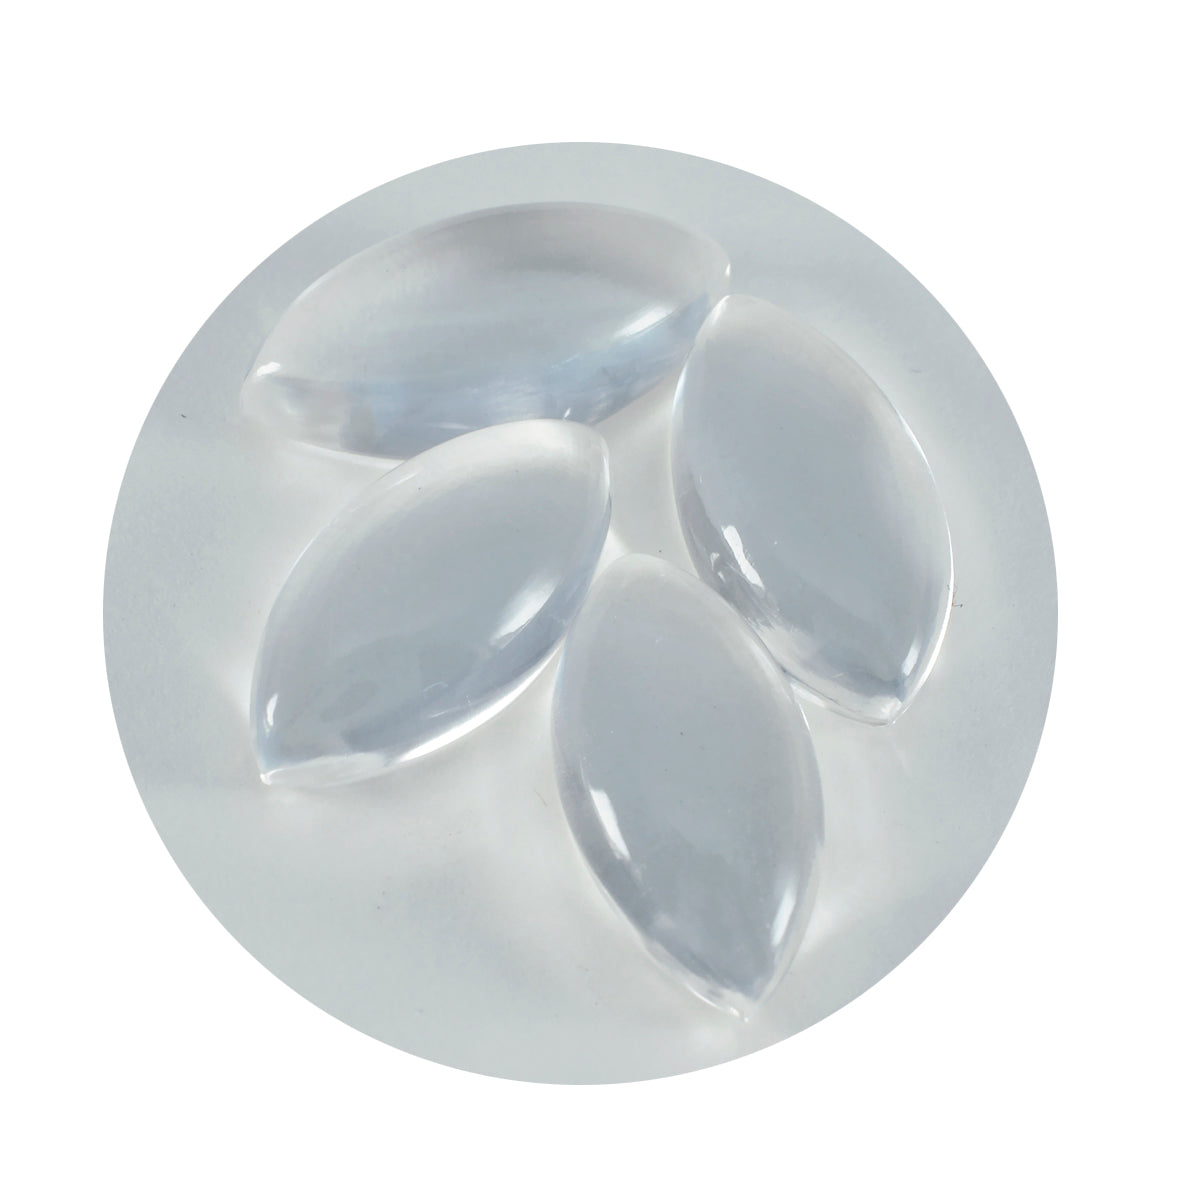 Riyogems 1PC White Crystal Quartz Cabochon 9x18 mm Marquise Shape good-looking Quality Gemstone